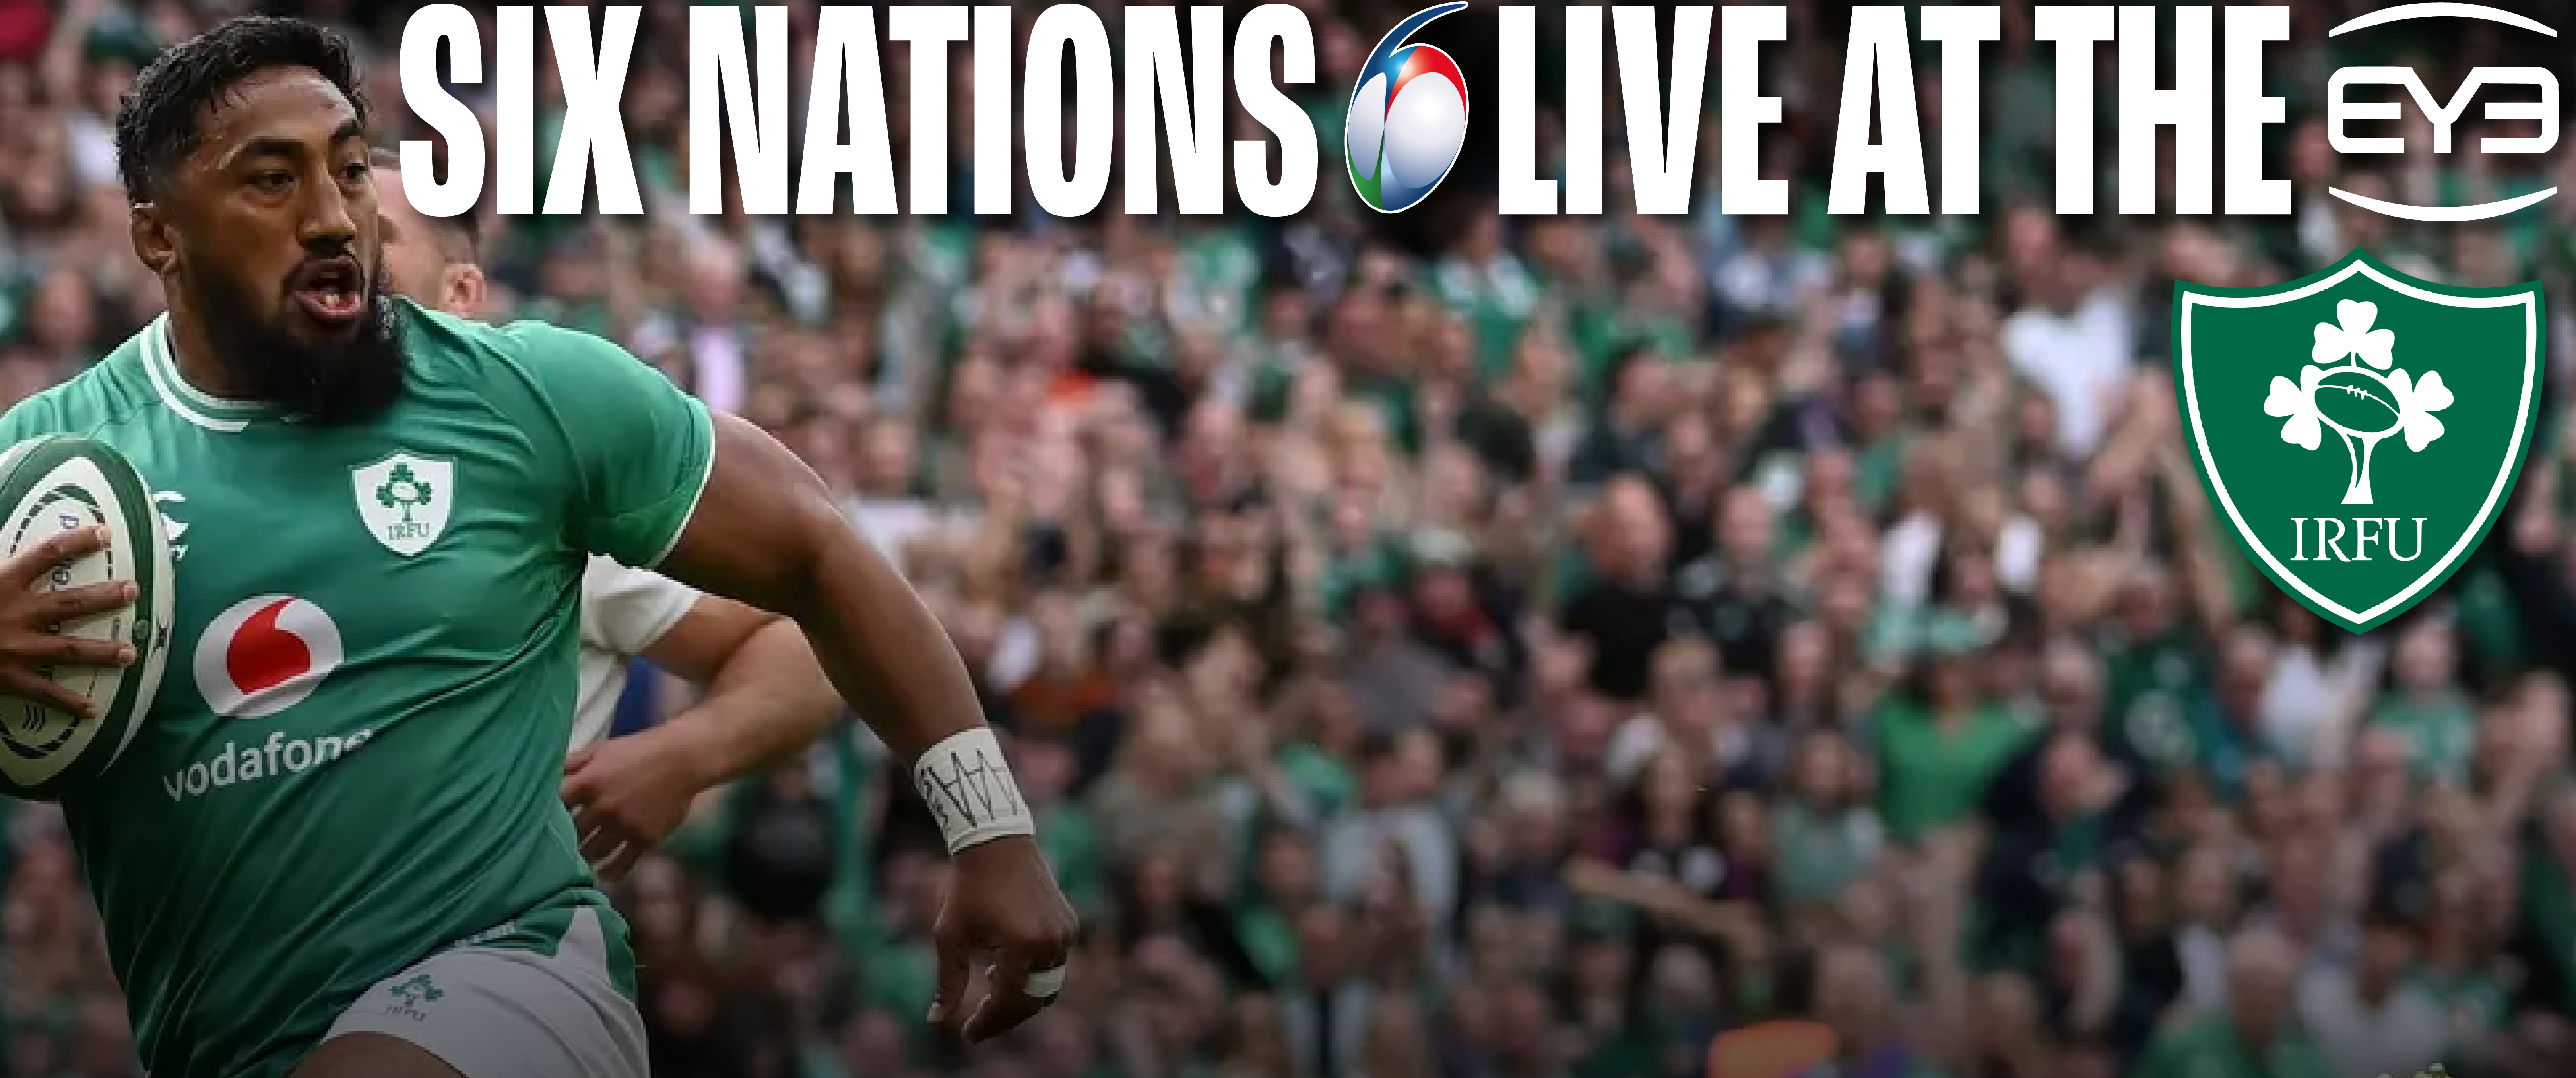 Six Nations LIVE - Ireland vs England